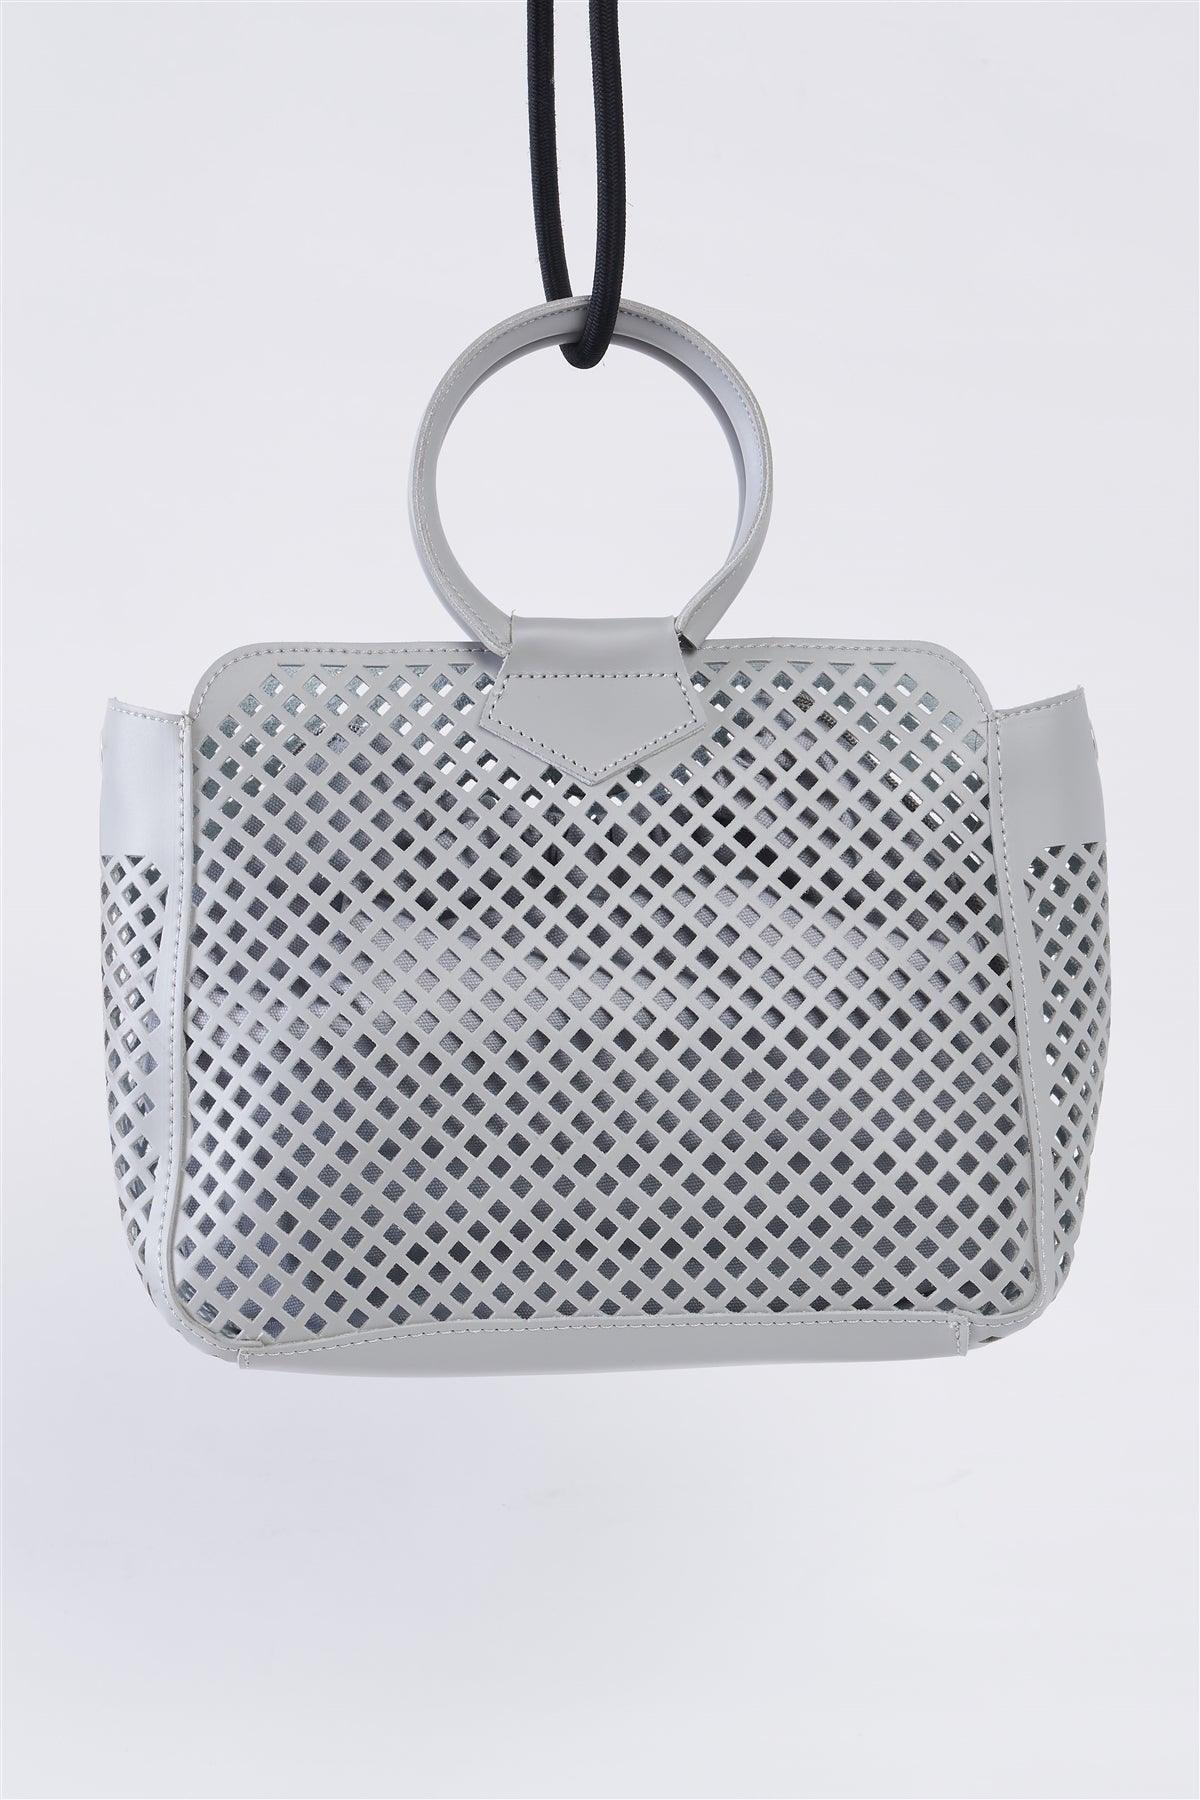 Grey Cloth Double Layered Faux Leather Mesh Hidden Magnetic Snap Button Closure Crossbody Handbag / 1 Bag